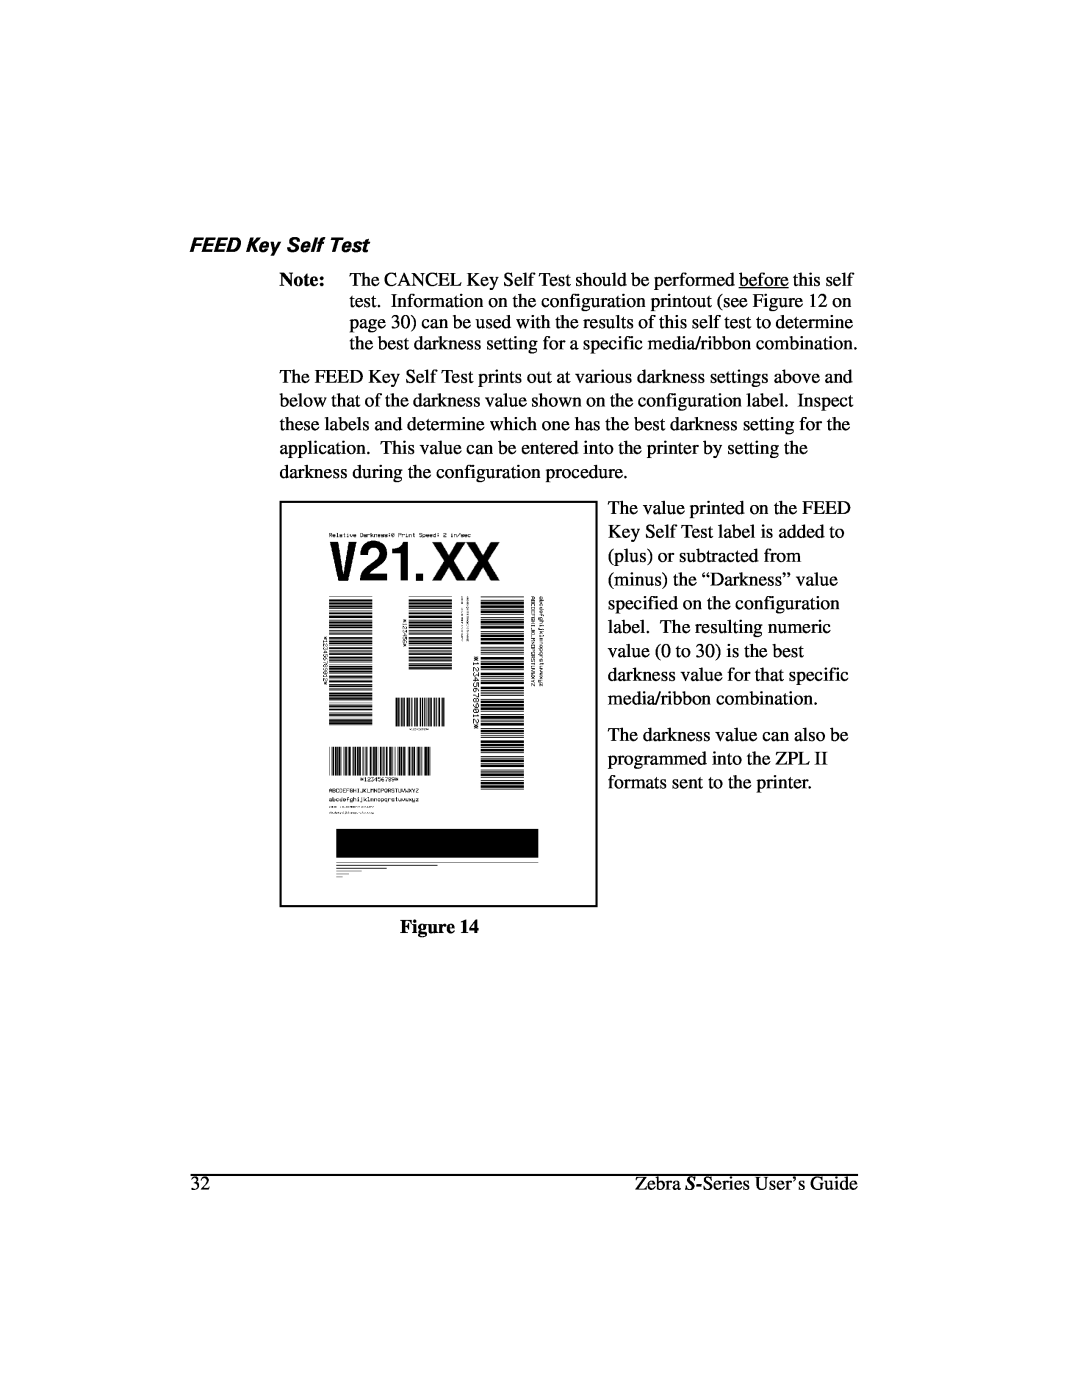 Zebra Technologies 105Se manual H\6HOI7HVW 